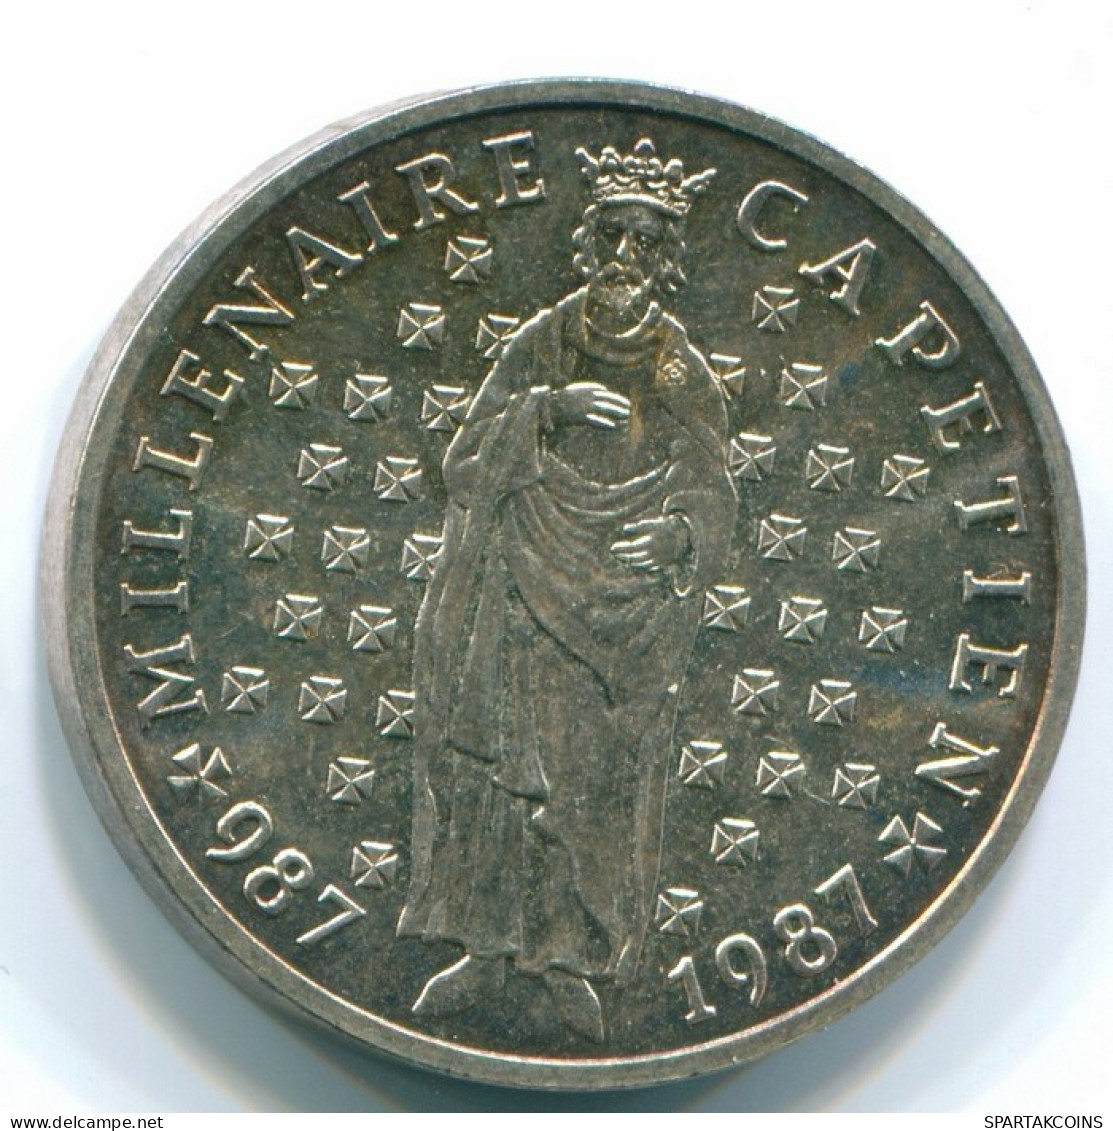 10 FRANCS 1987 FRANCE Coin MILLENAIRE CAPETIEN UNC #FR1103.9.U.A - 10 Francs